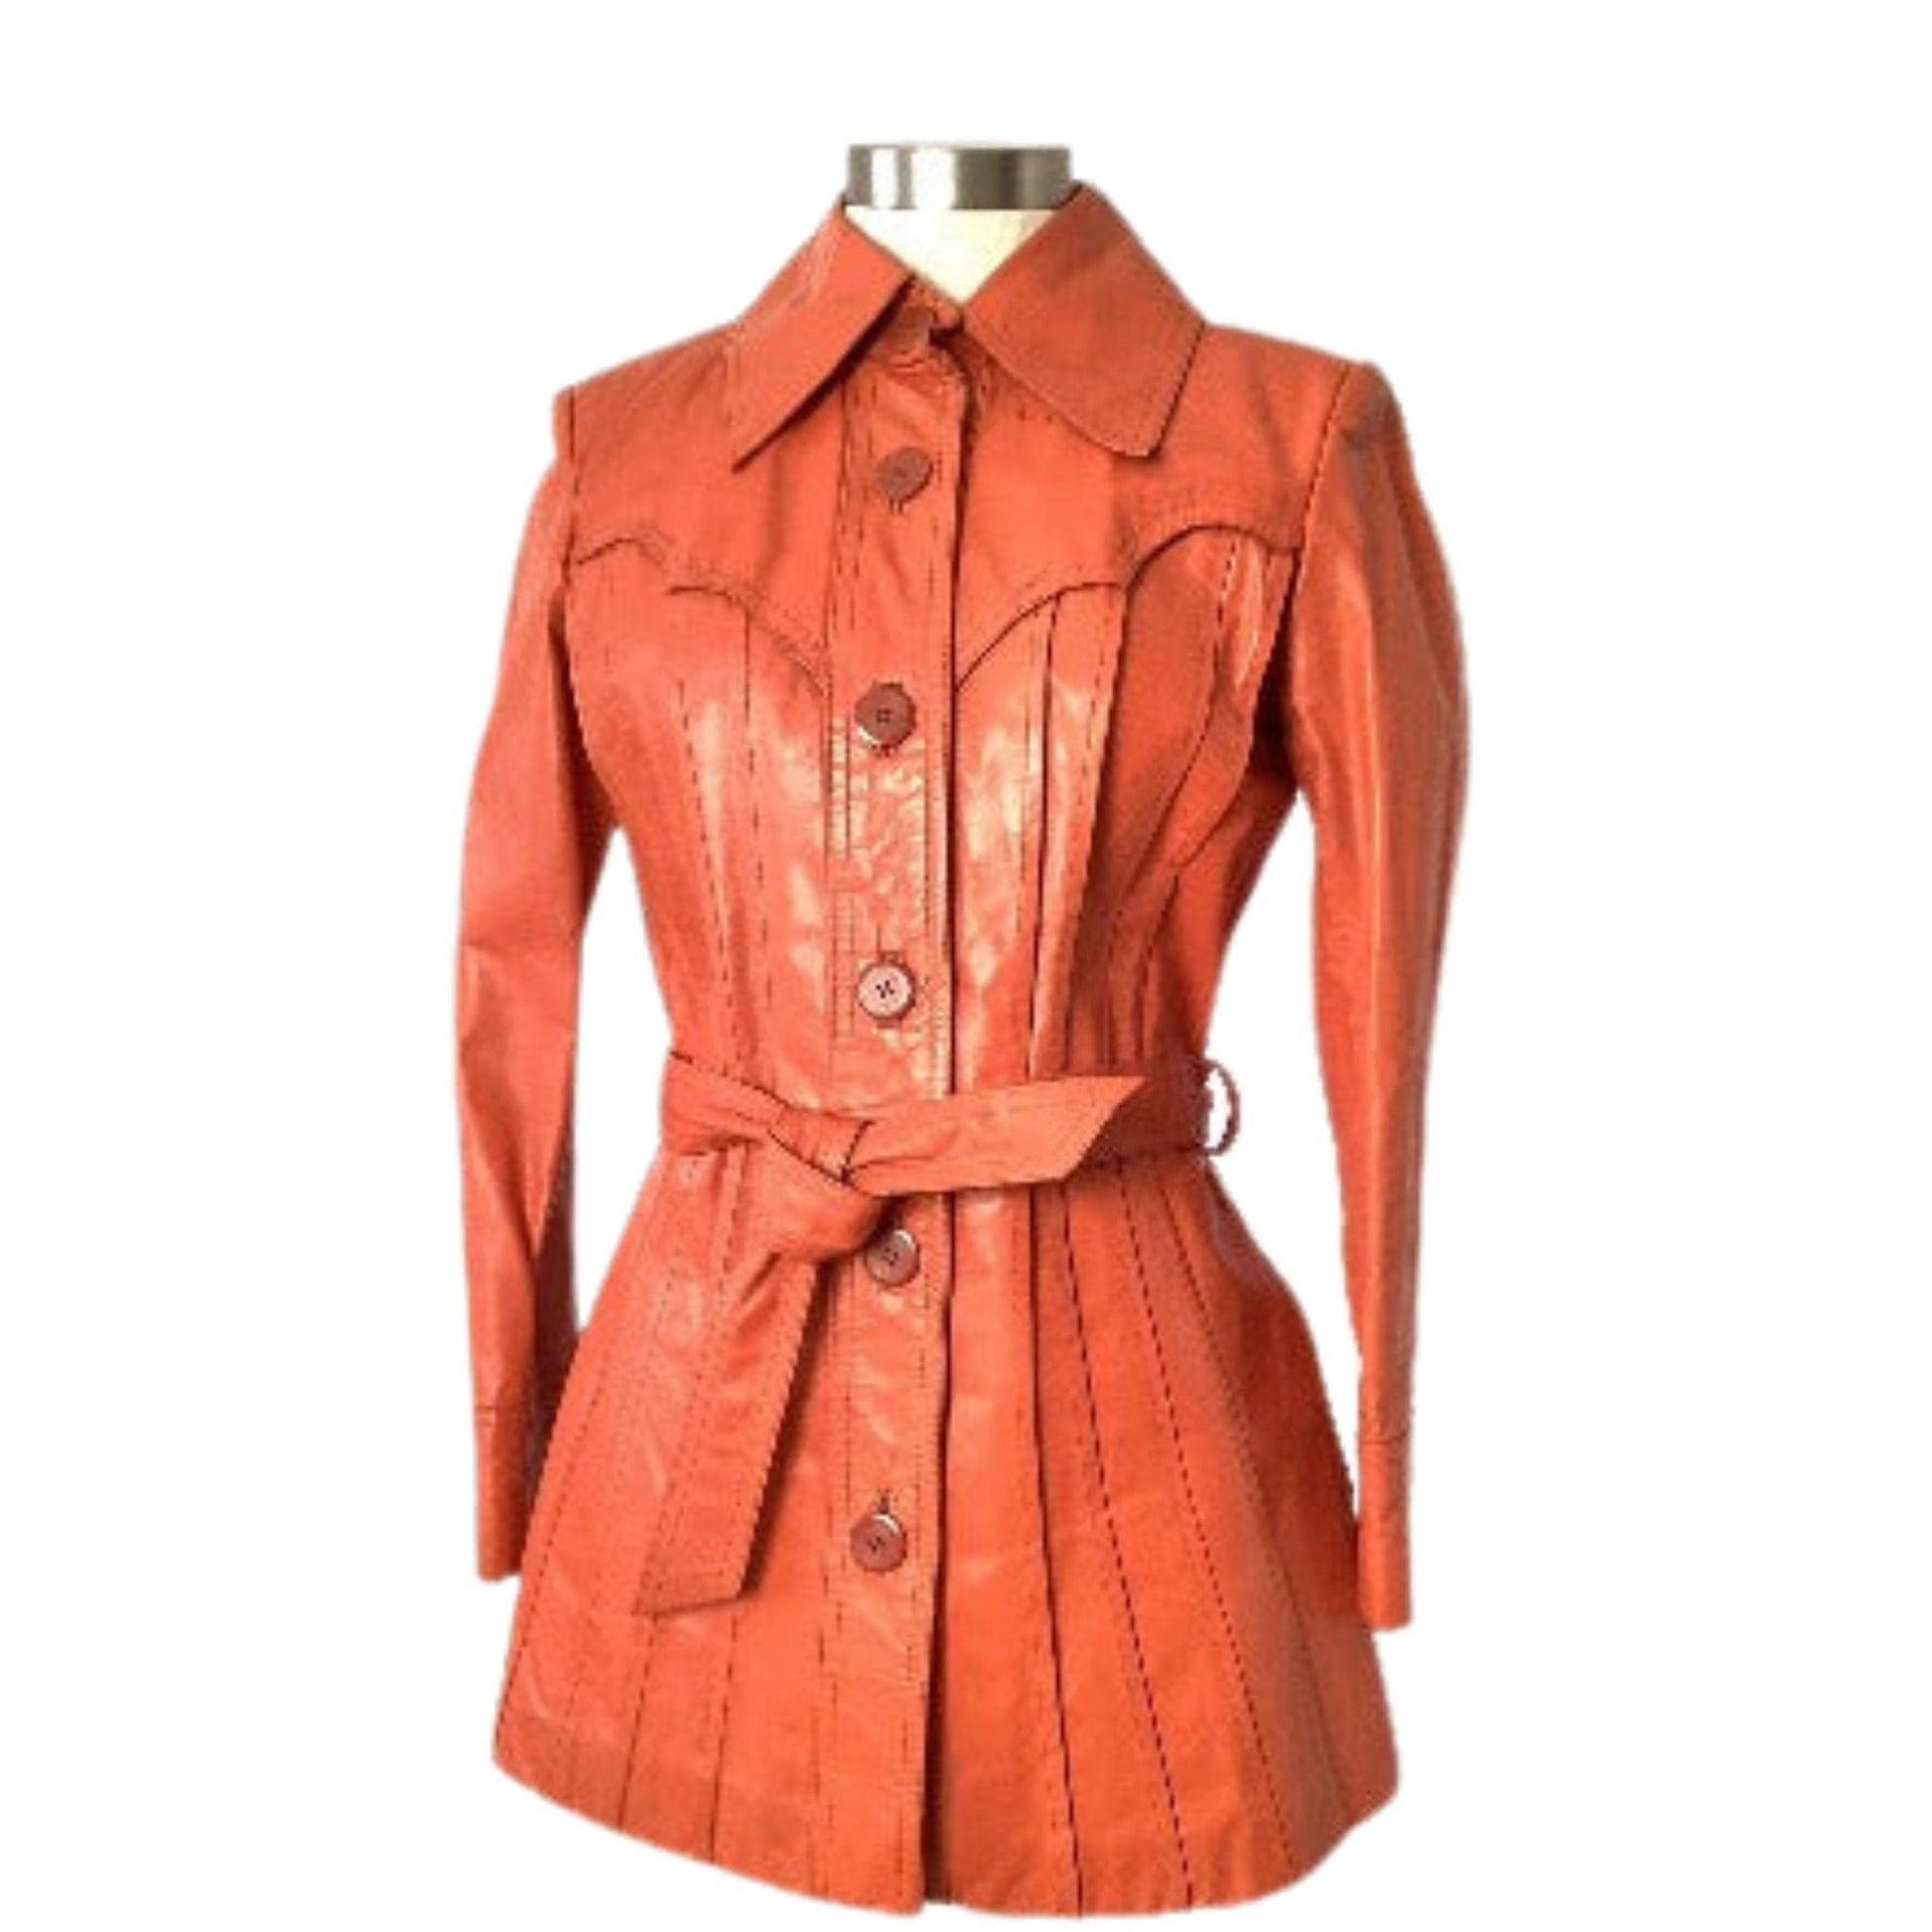 Orange Leather Jacket Small / Orange / Vintage 1970s